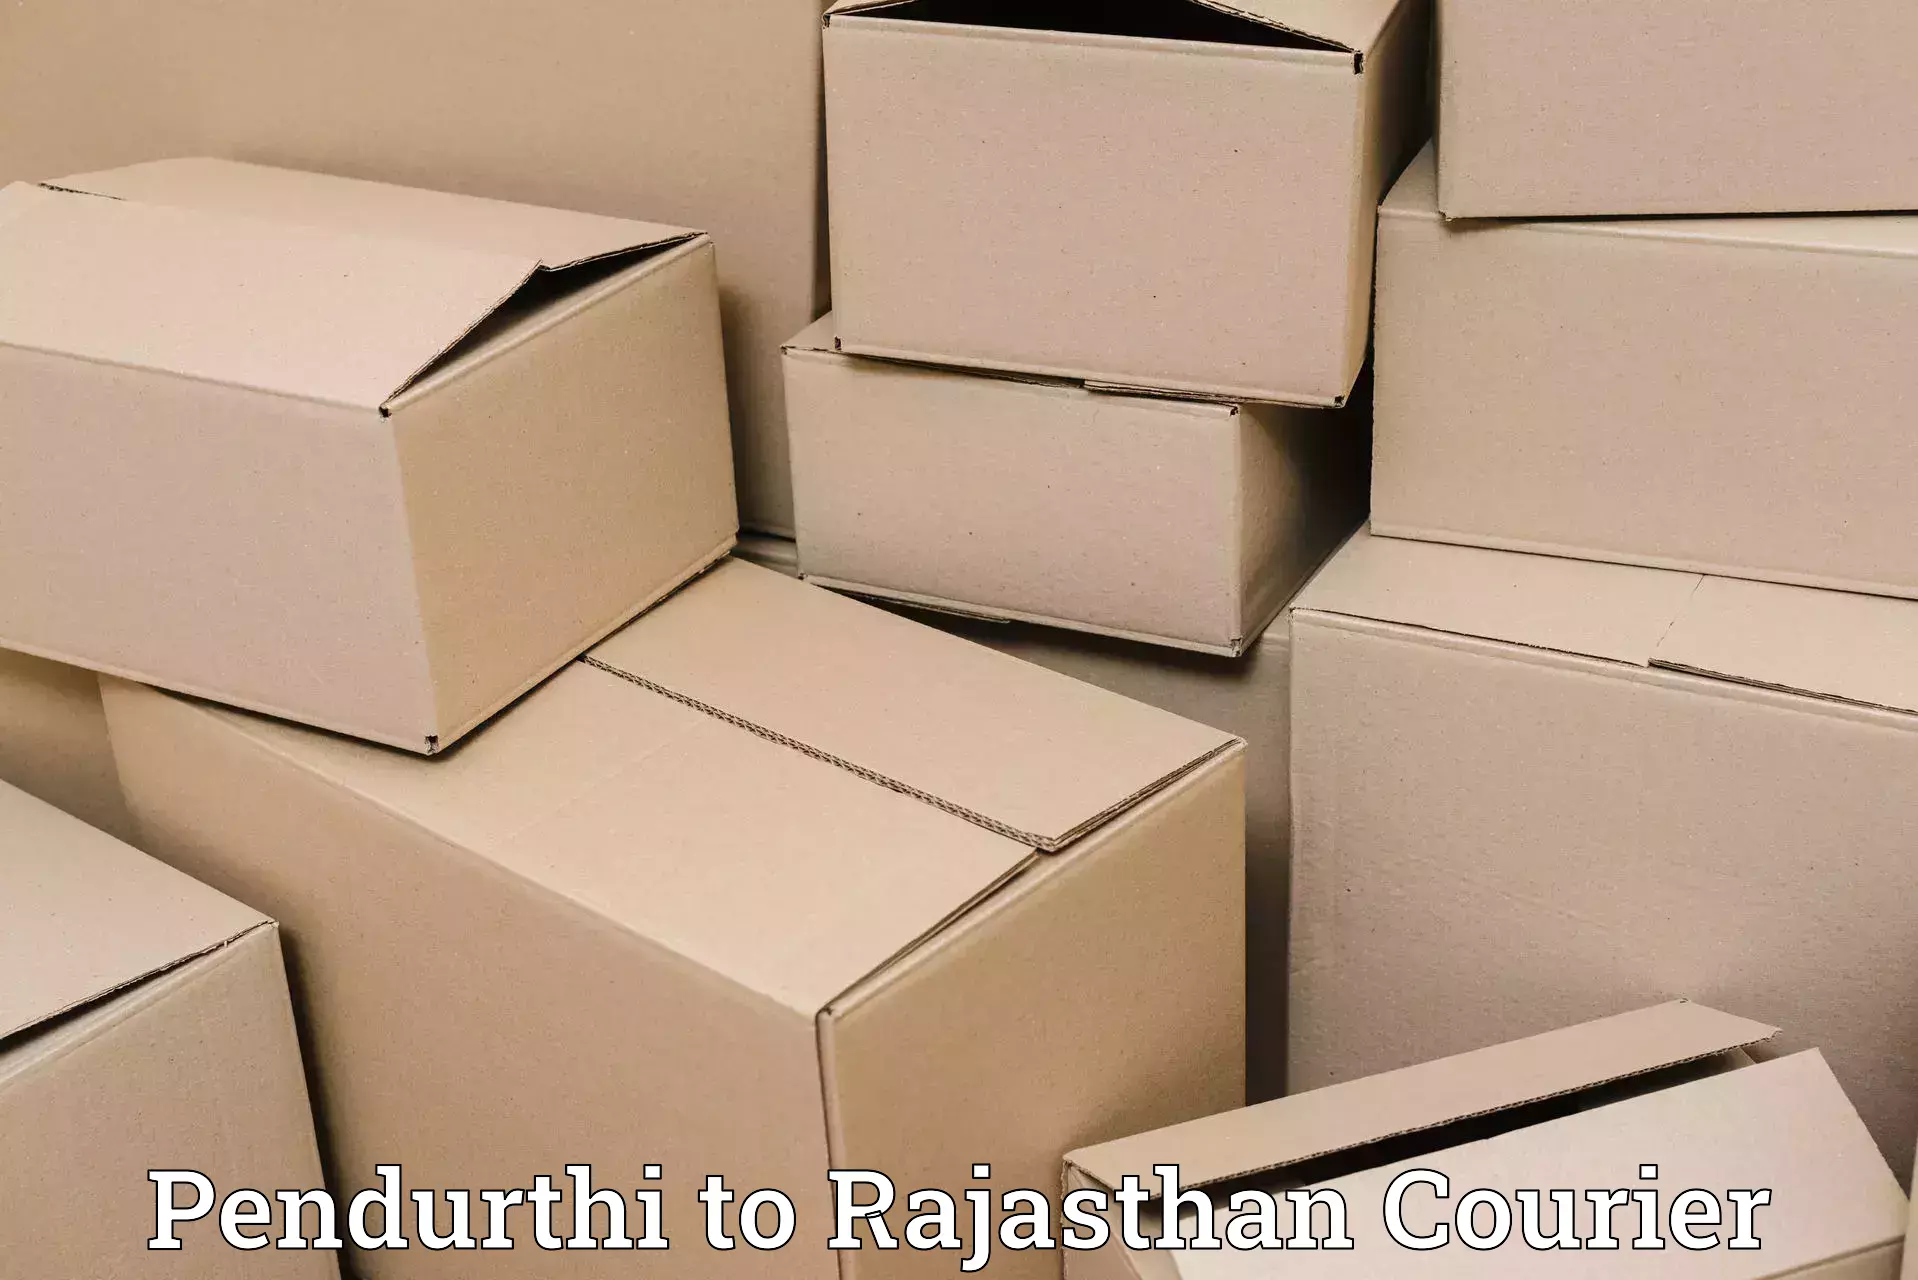 Courier service partnerships Pendurthi to Rajasthan